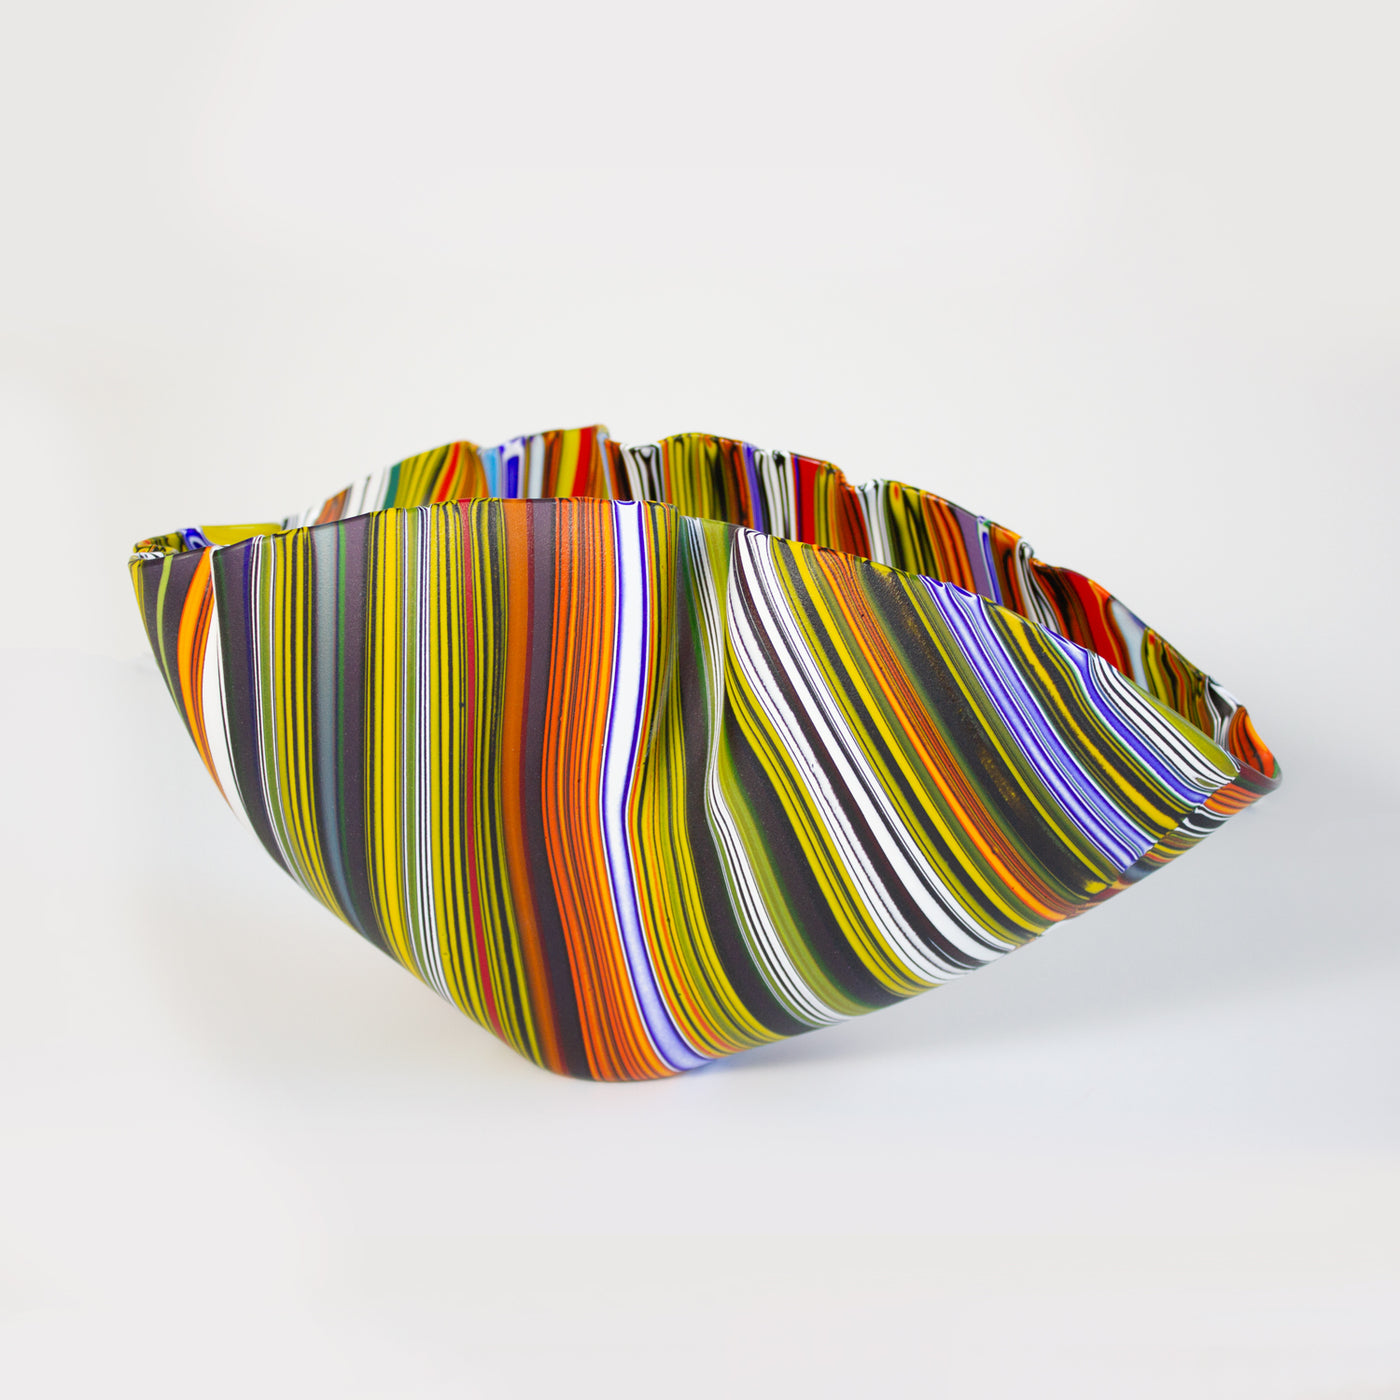 Bowl Form with Polychrome Stripes